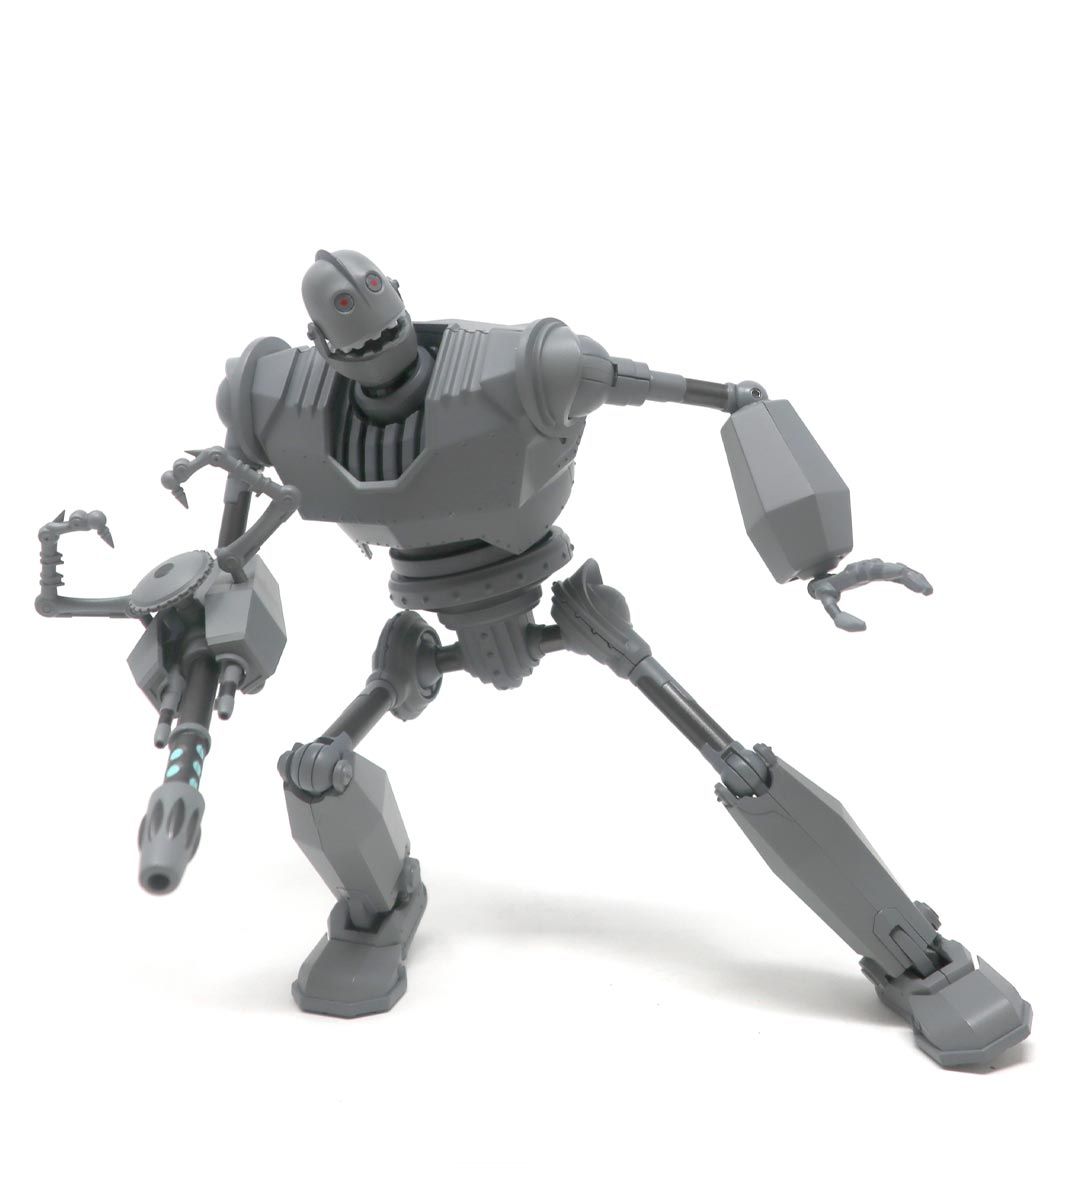 Riobot - The Iron Giant (Battle Mode)